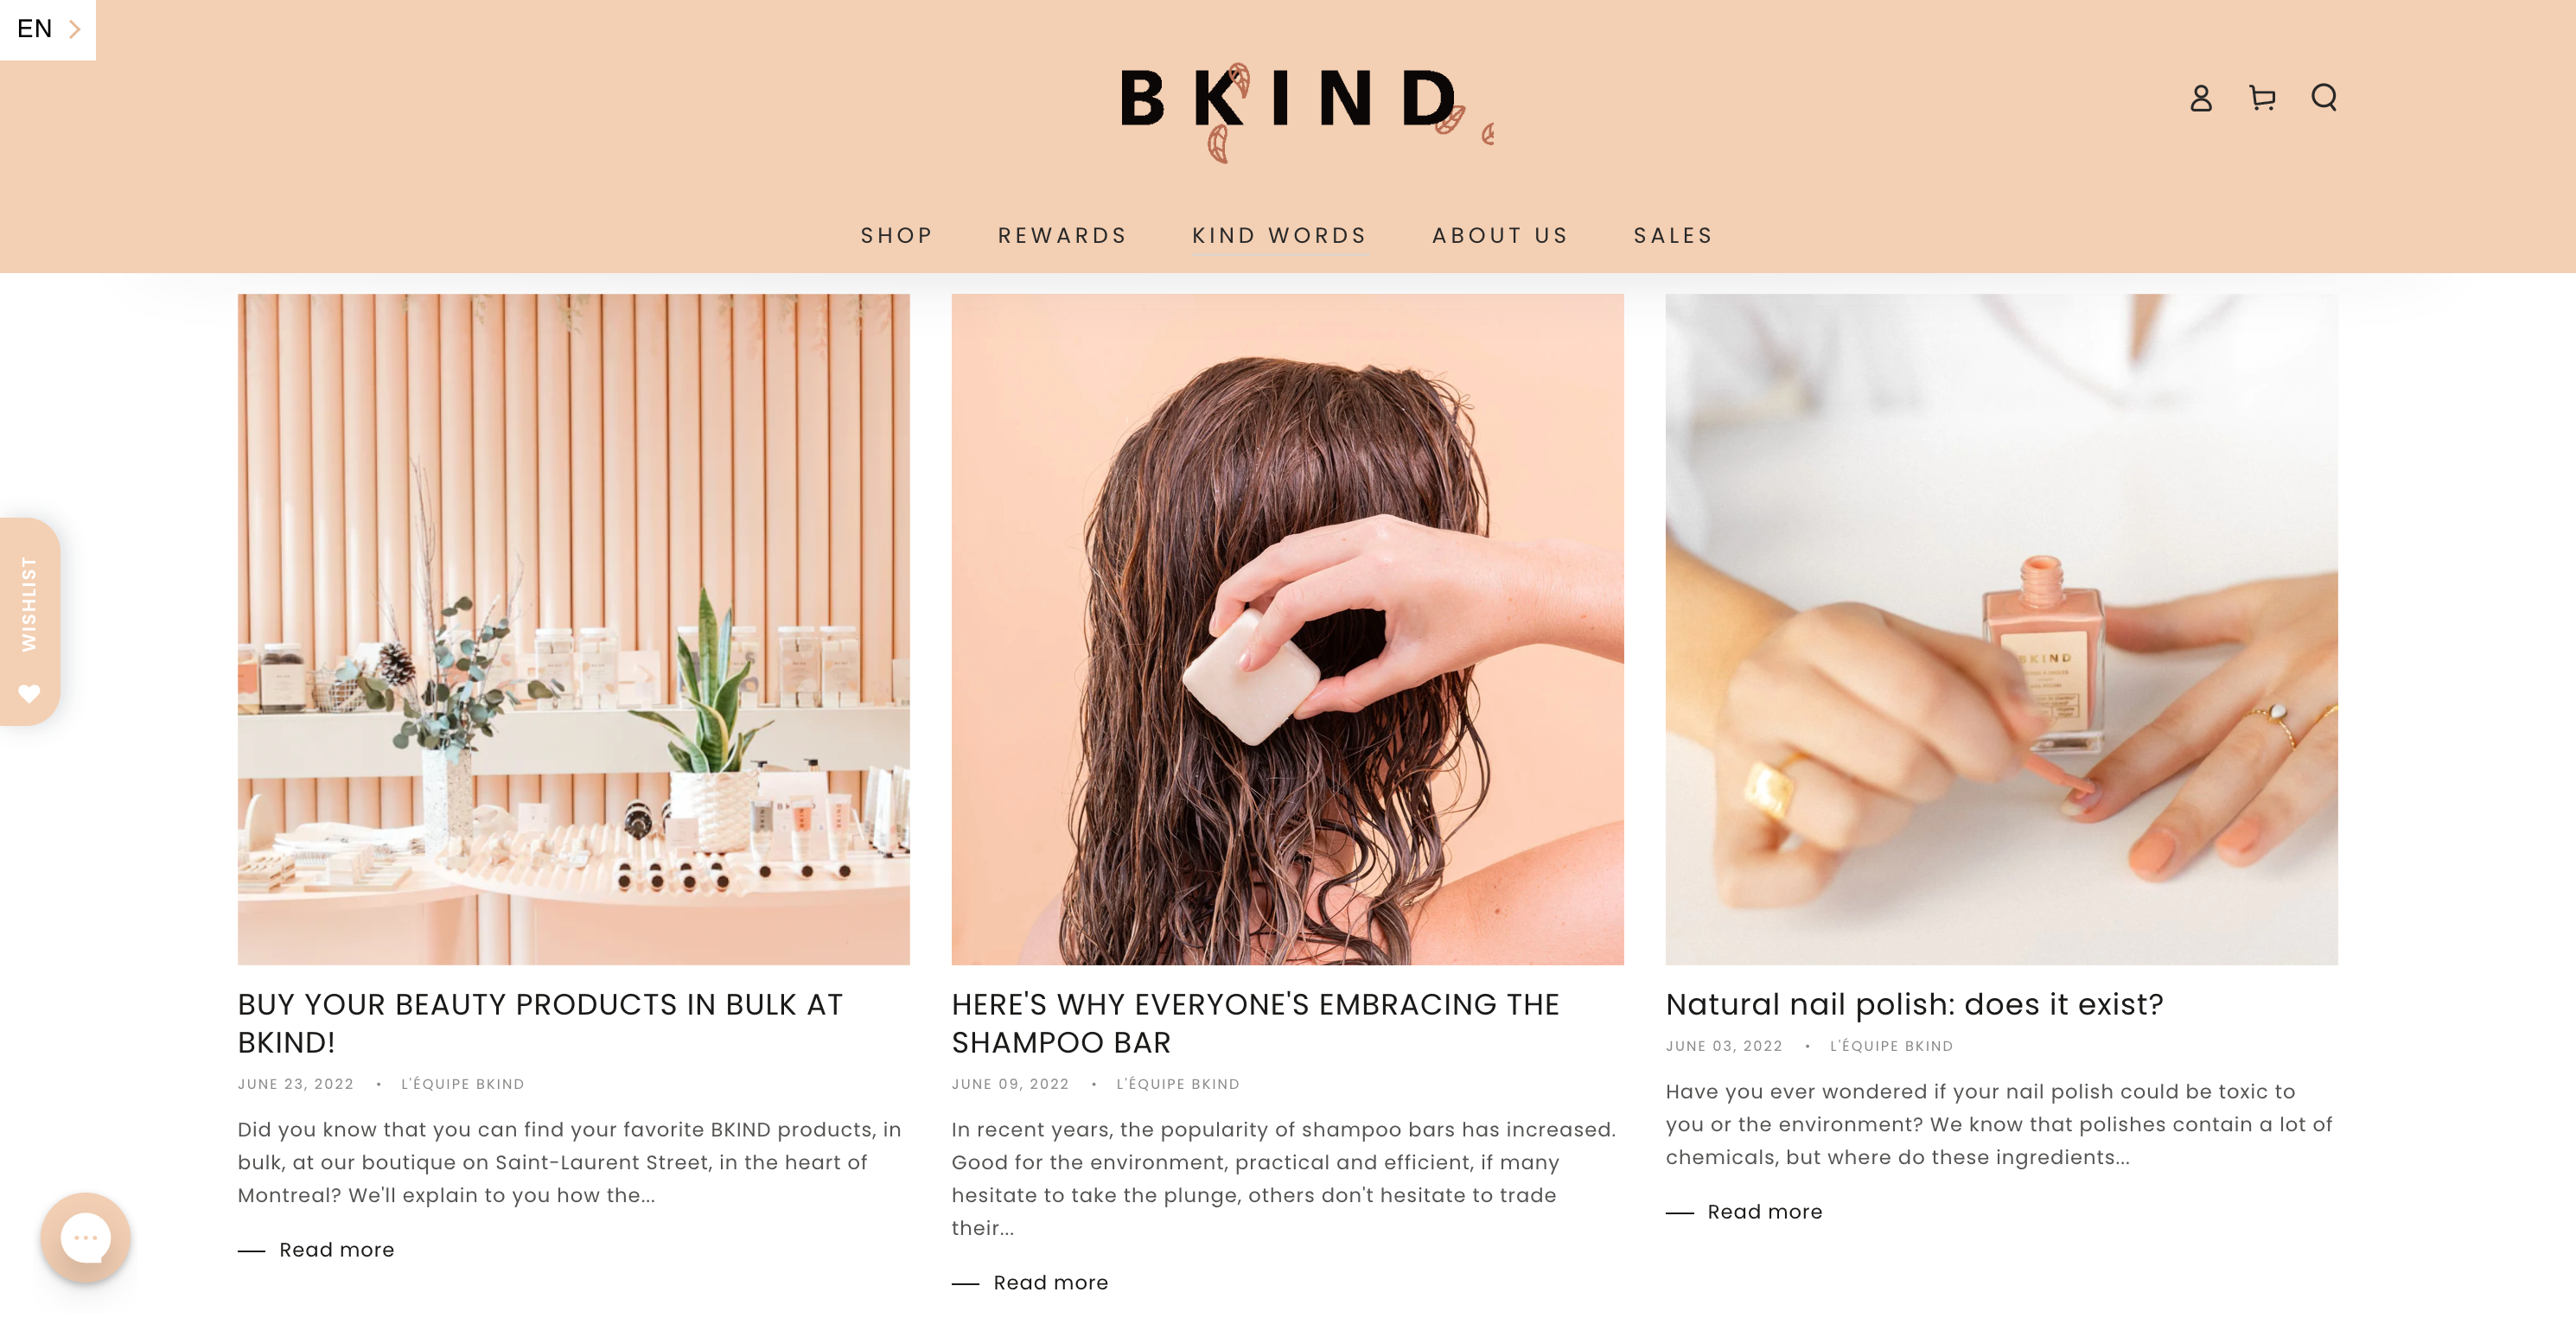 BKIND's website showcases blog posts on topics like nail polish and shampoo bars